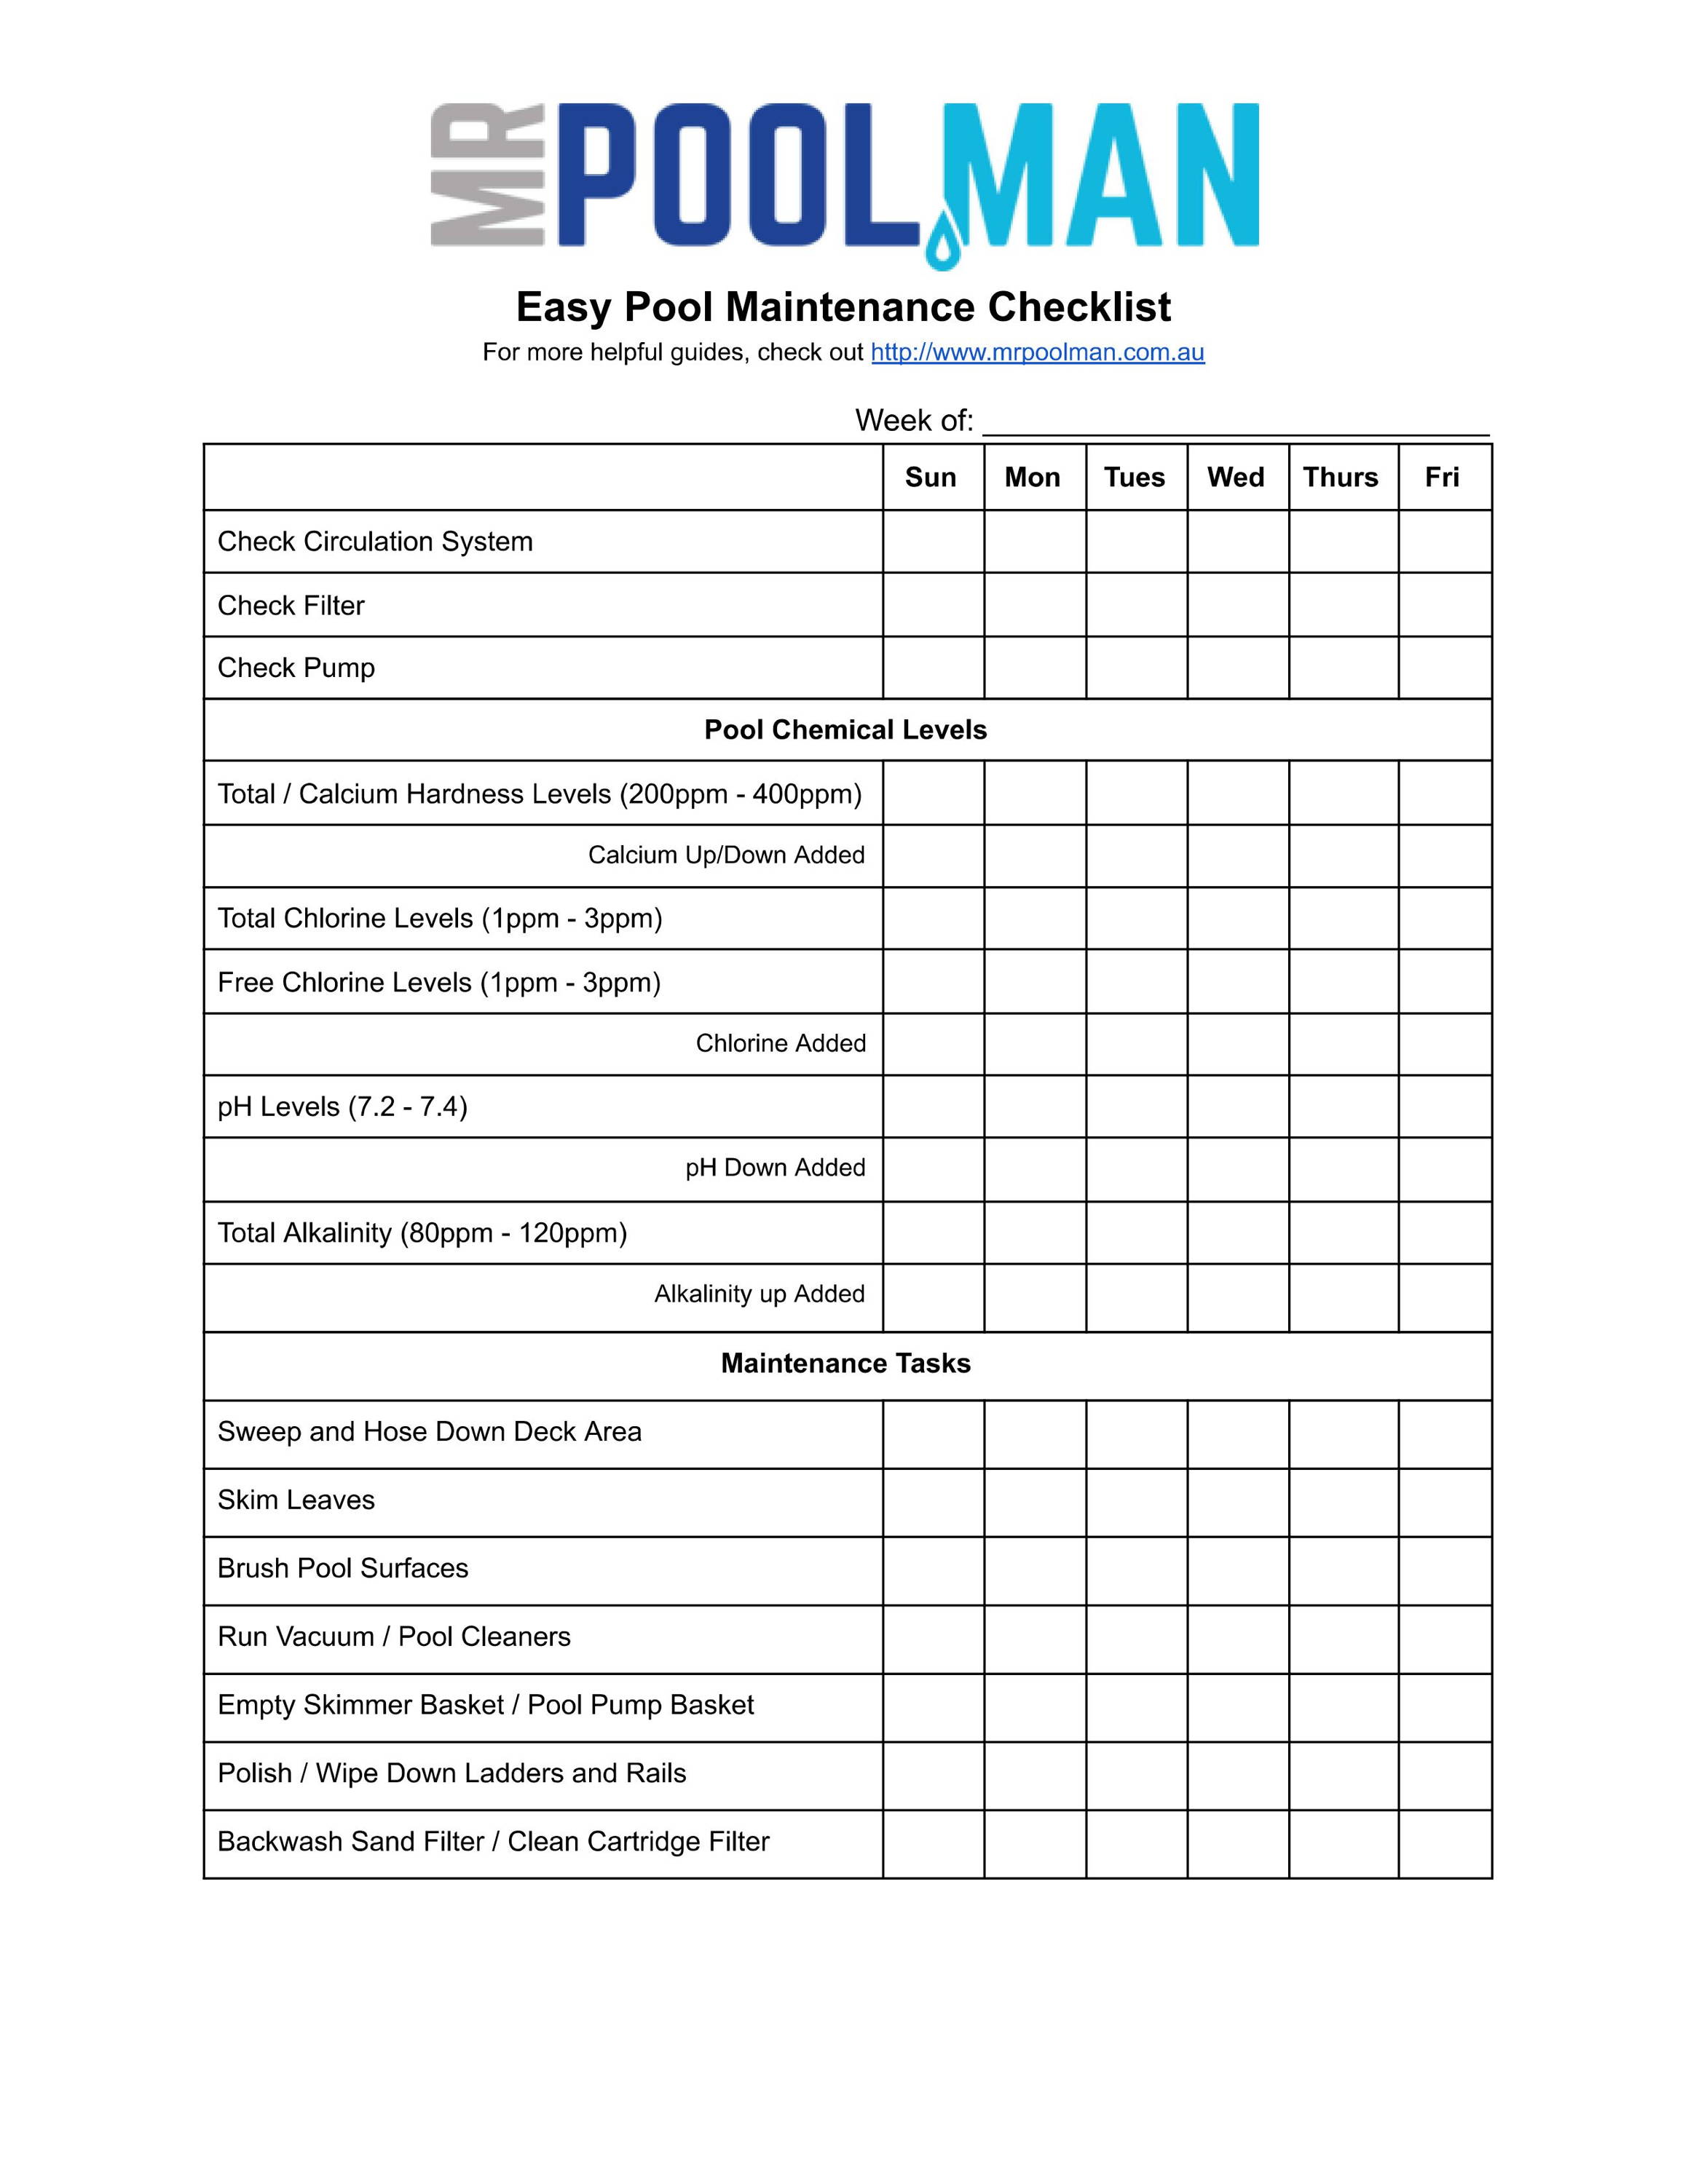 Mr Pool Man's Printable Pool Maintenance Checklist